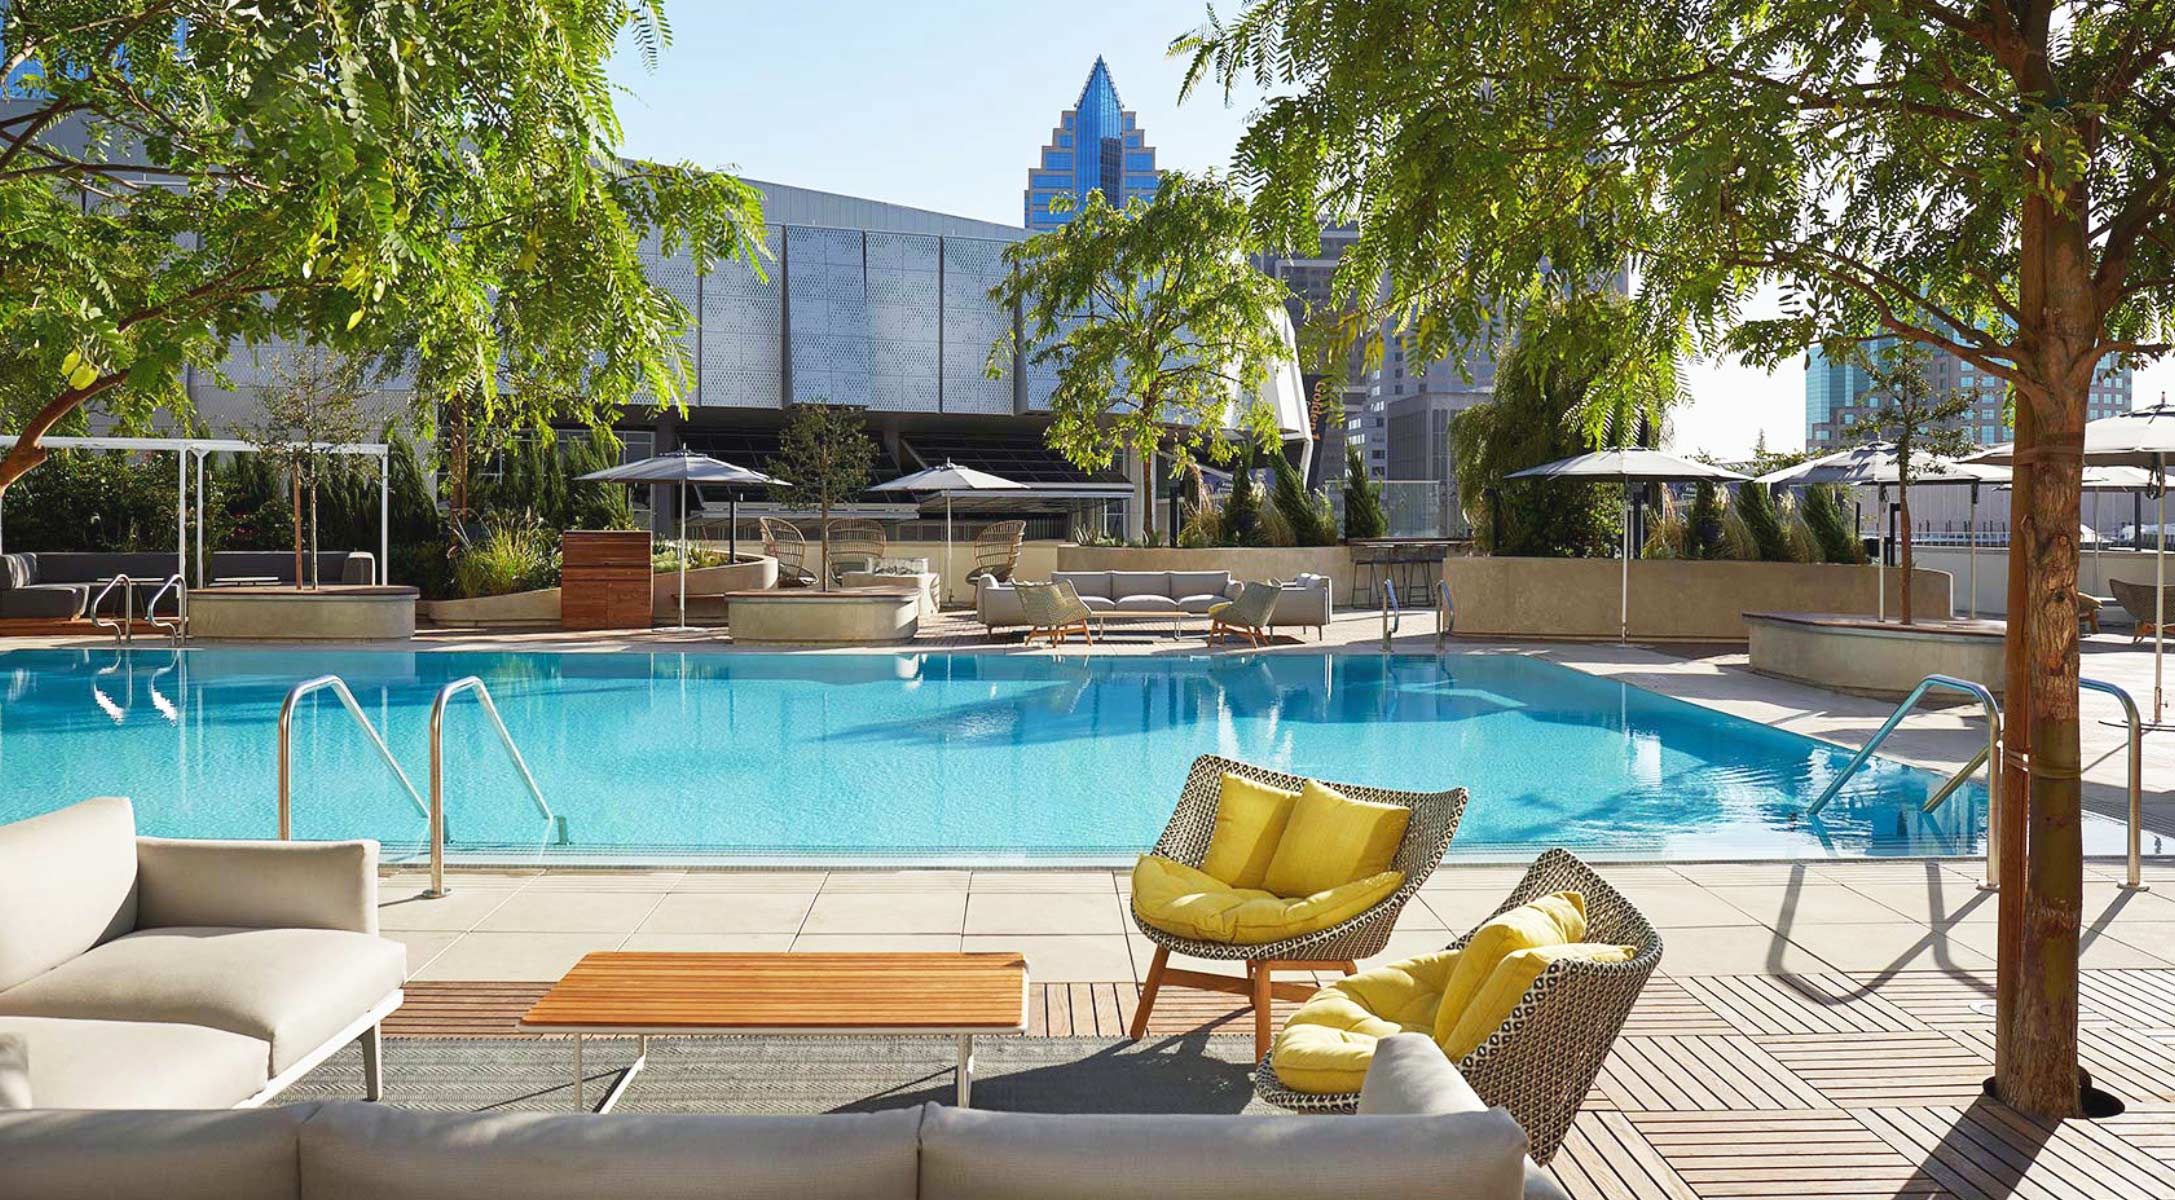 Hospitaltiy and Resort Pool and Lounge Area